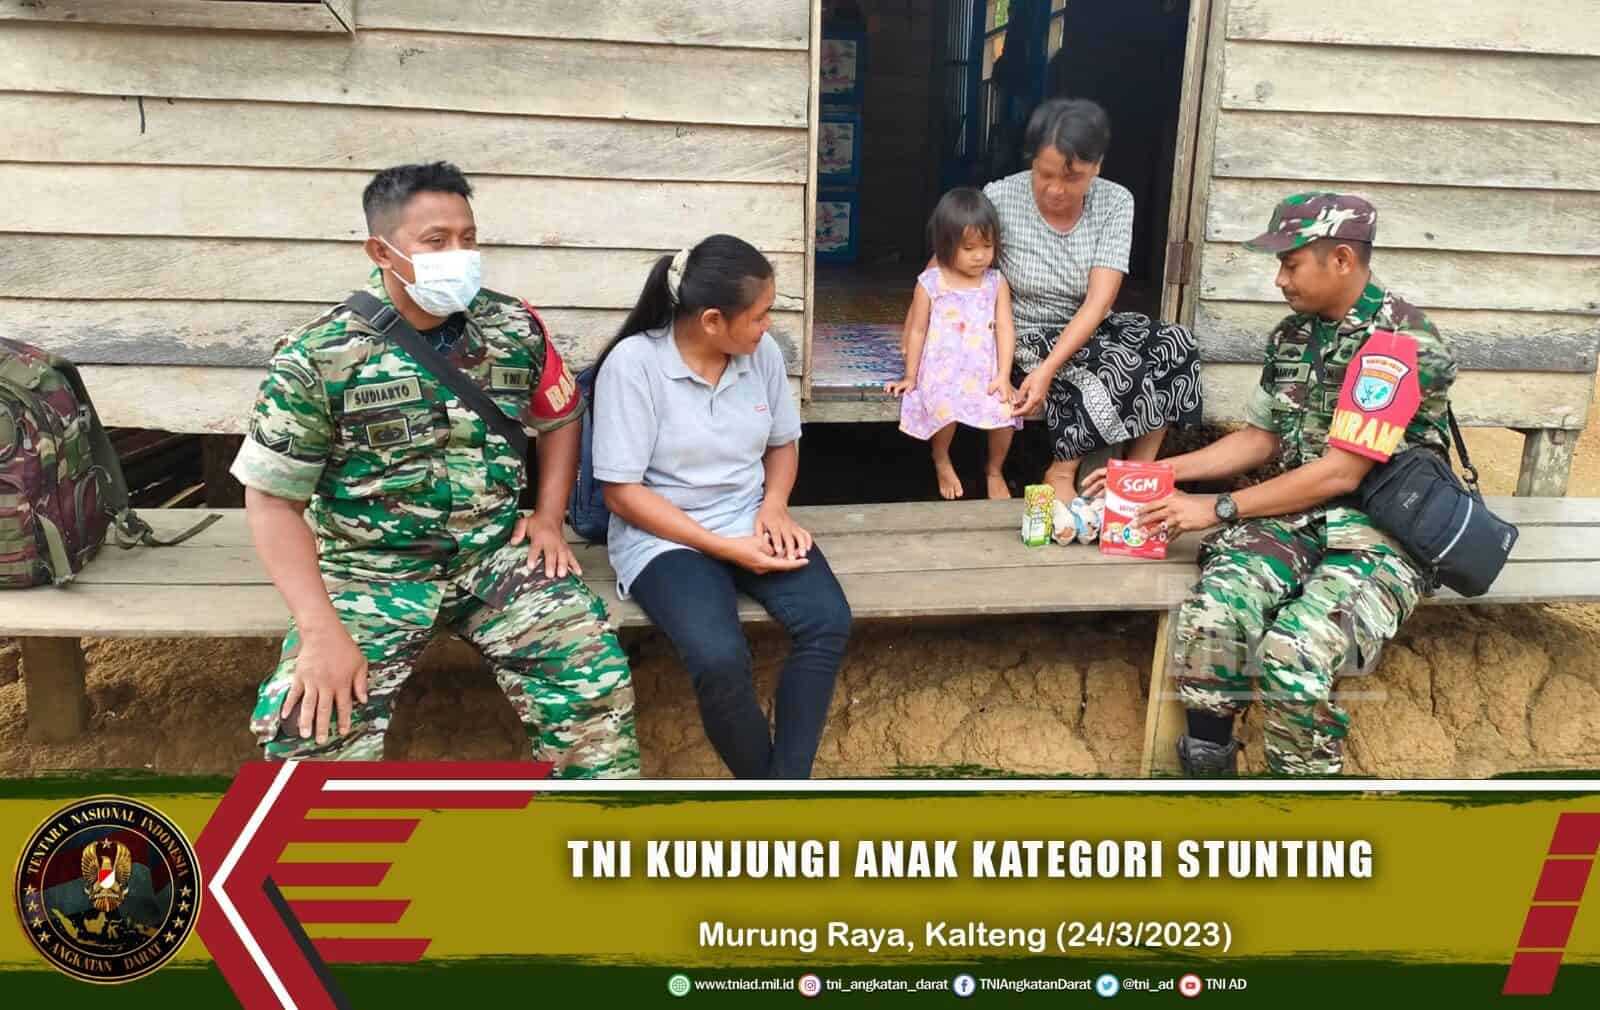 Jumat Berkah, TNI Kunjungi Anak Kategori Stunting